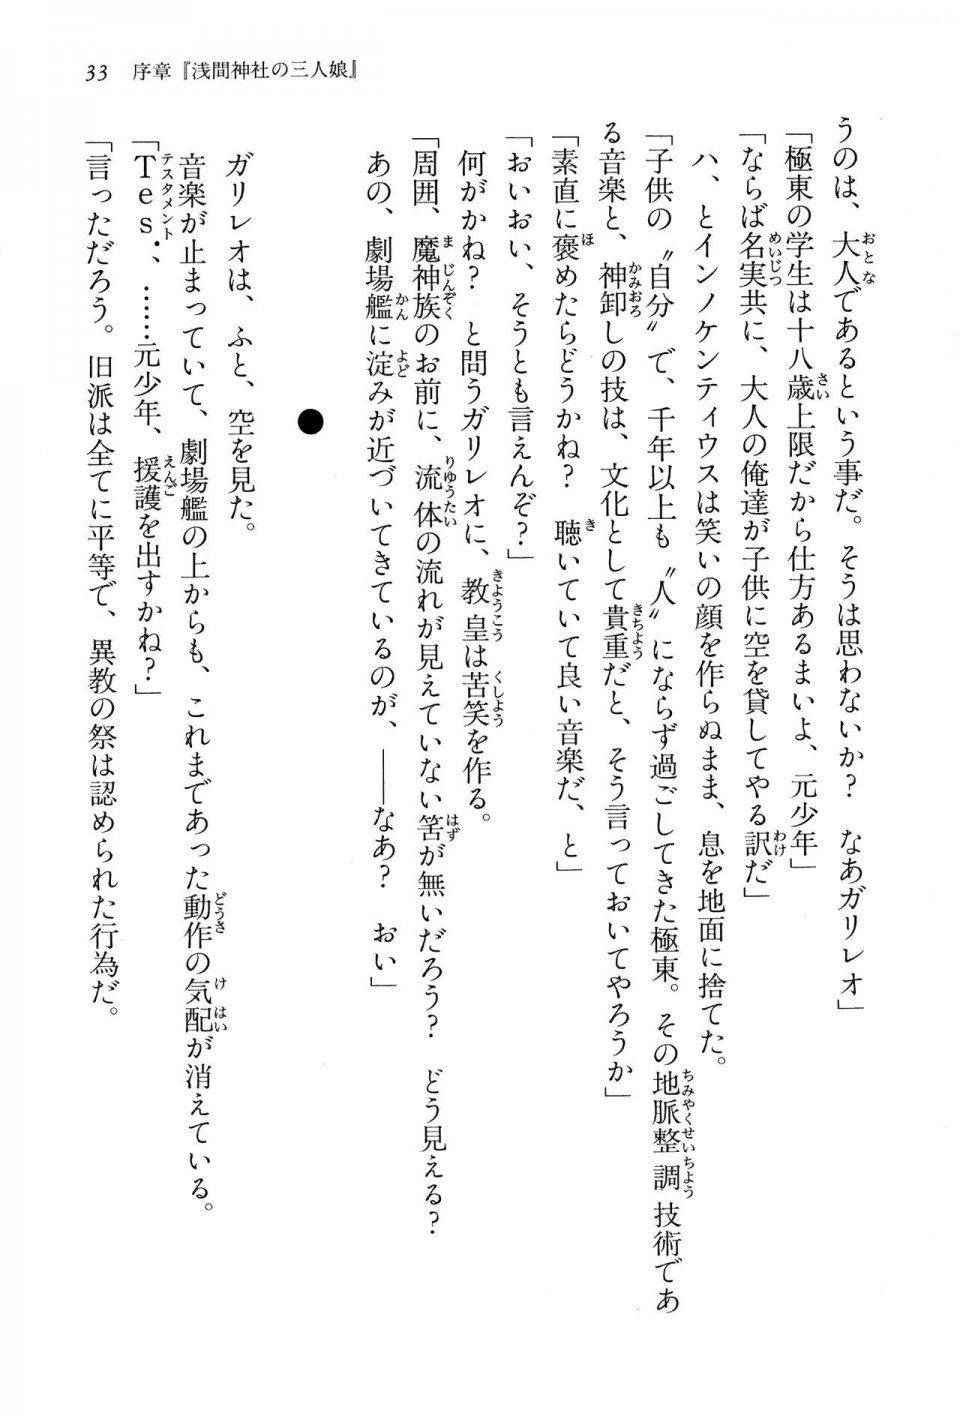 Kyoukai Senjou no Horizon BD Special Mininovel Vol 1(1A) - Photo #37